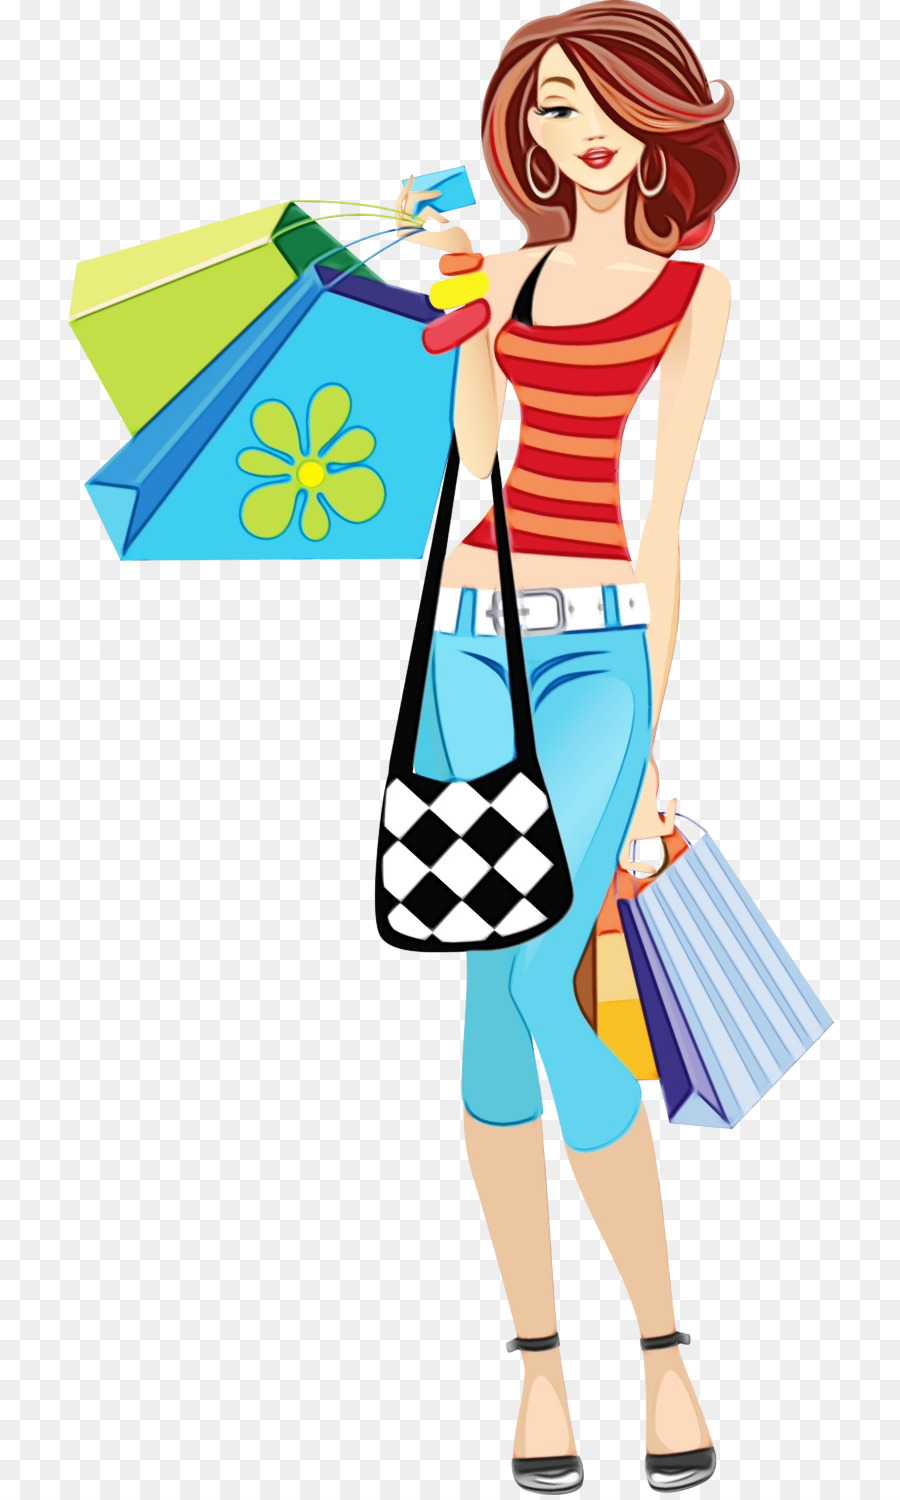 Shopping Cartoon Cartoon Women Shopping Png Download 1198 1298 Free Transparent Shopping Png Download Clip Art Library